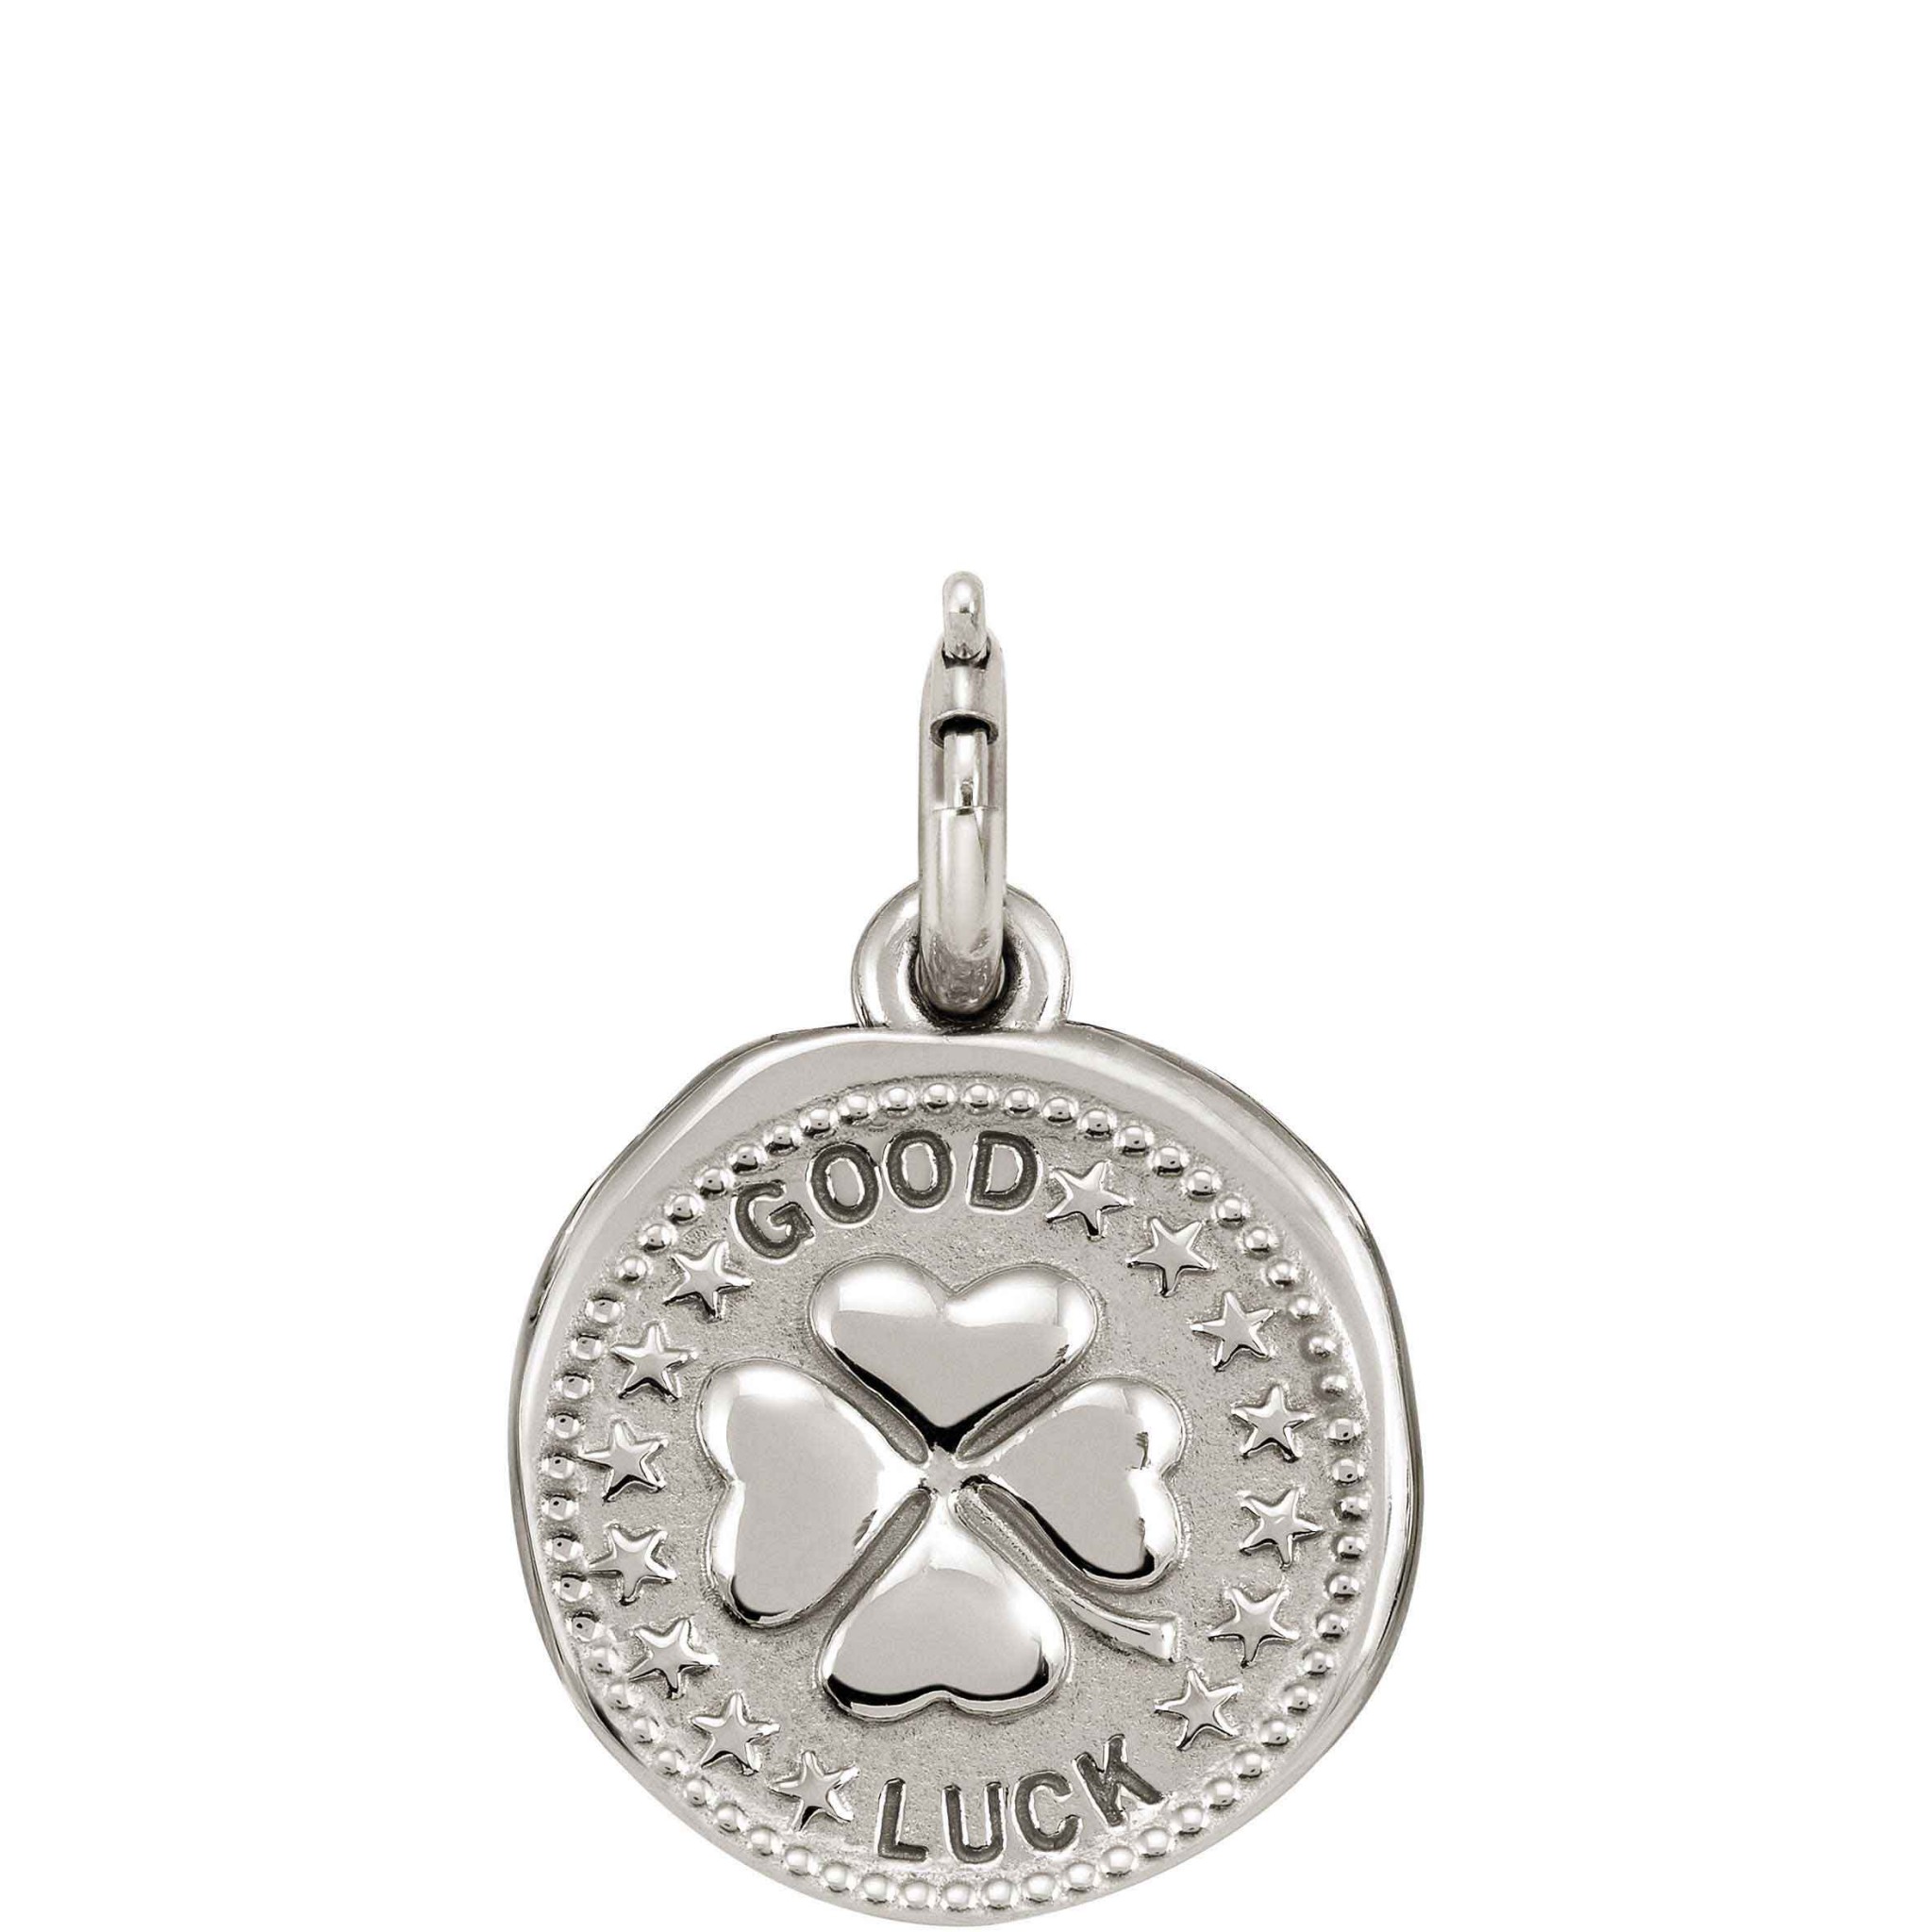 Nomination-medaljon-good-luck